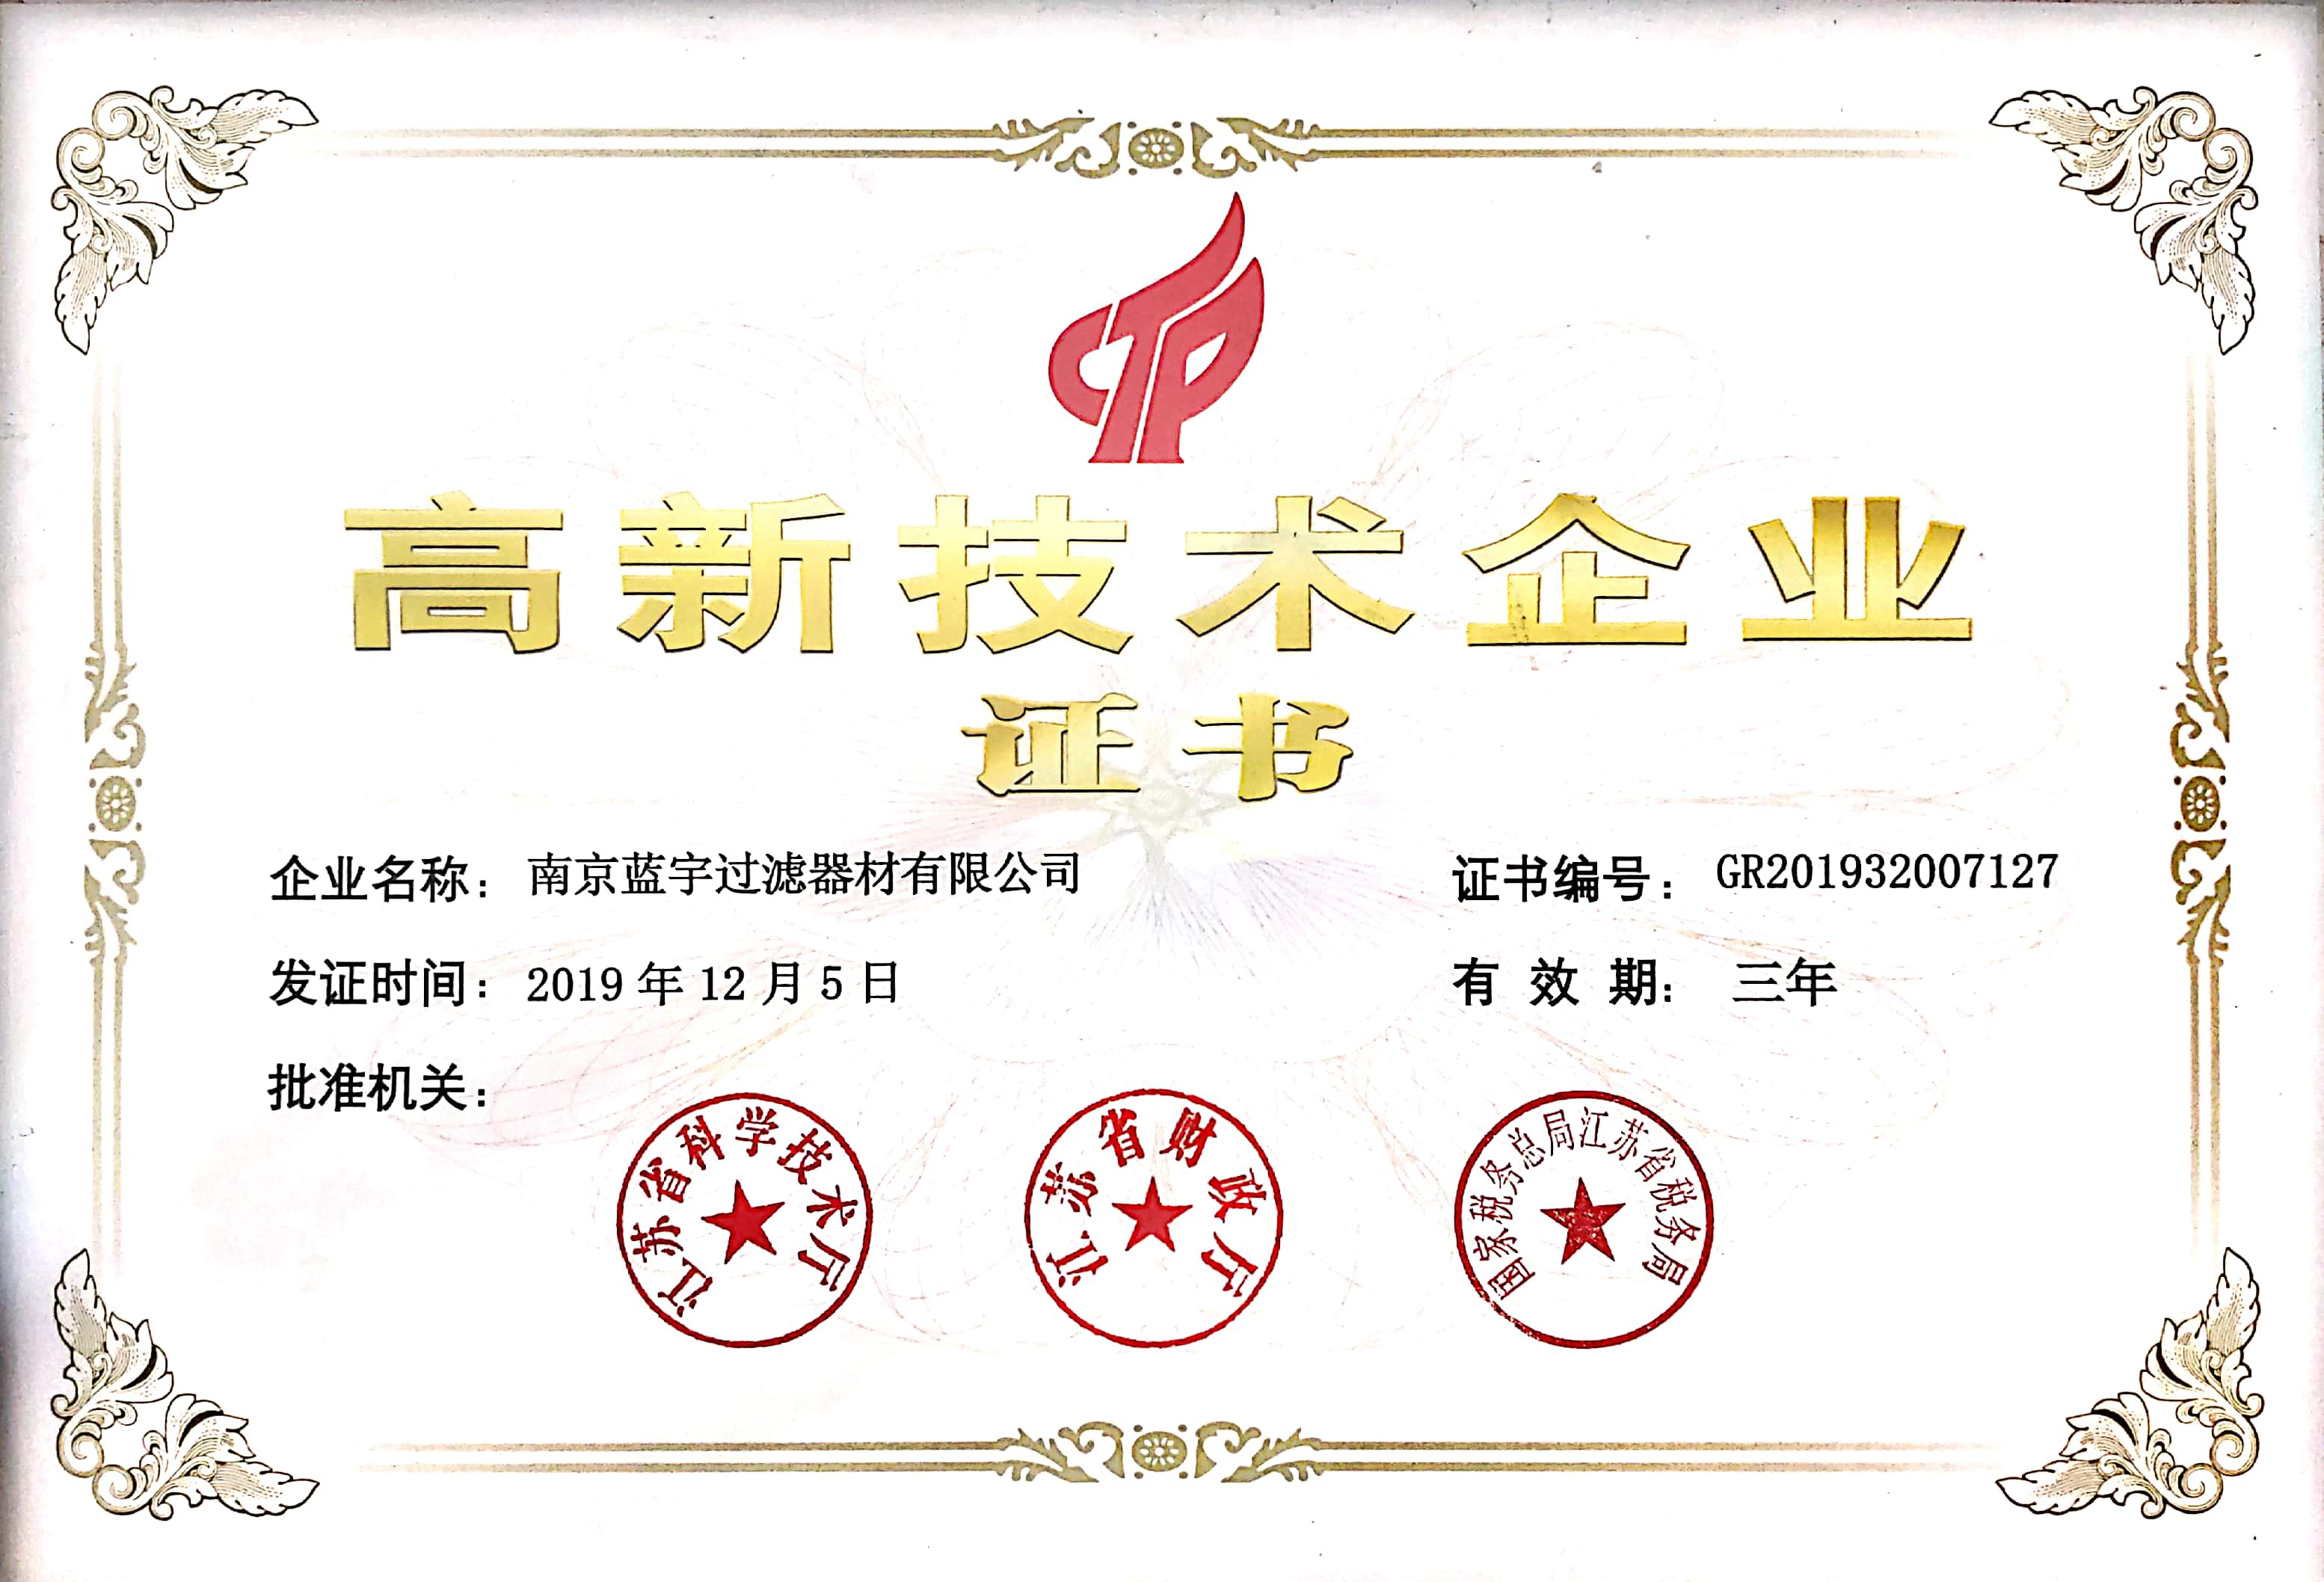 Nanjing Blue Sky Filter Co.、Ltd.、おめでとうございます。国家ハイテク企業認証を獲得するため